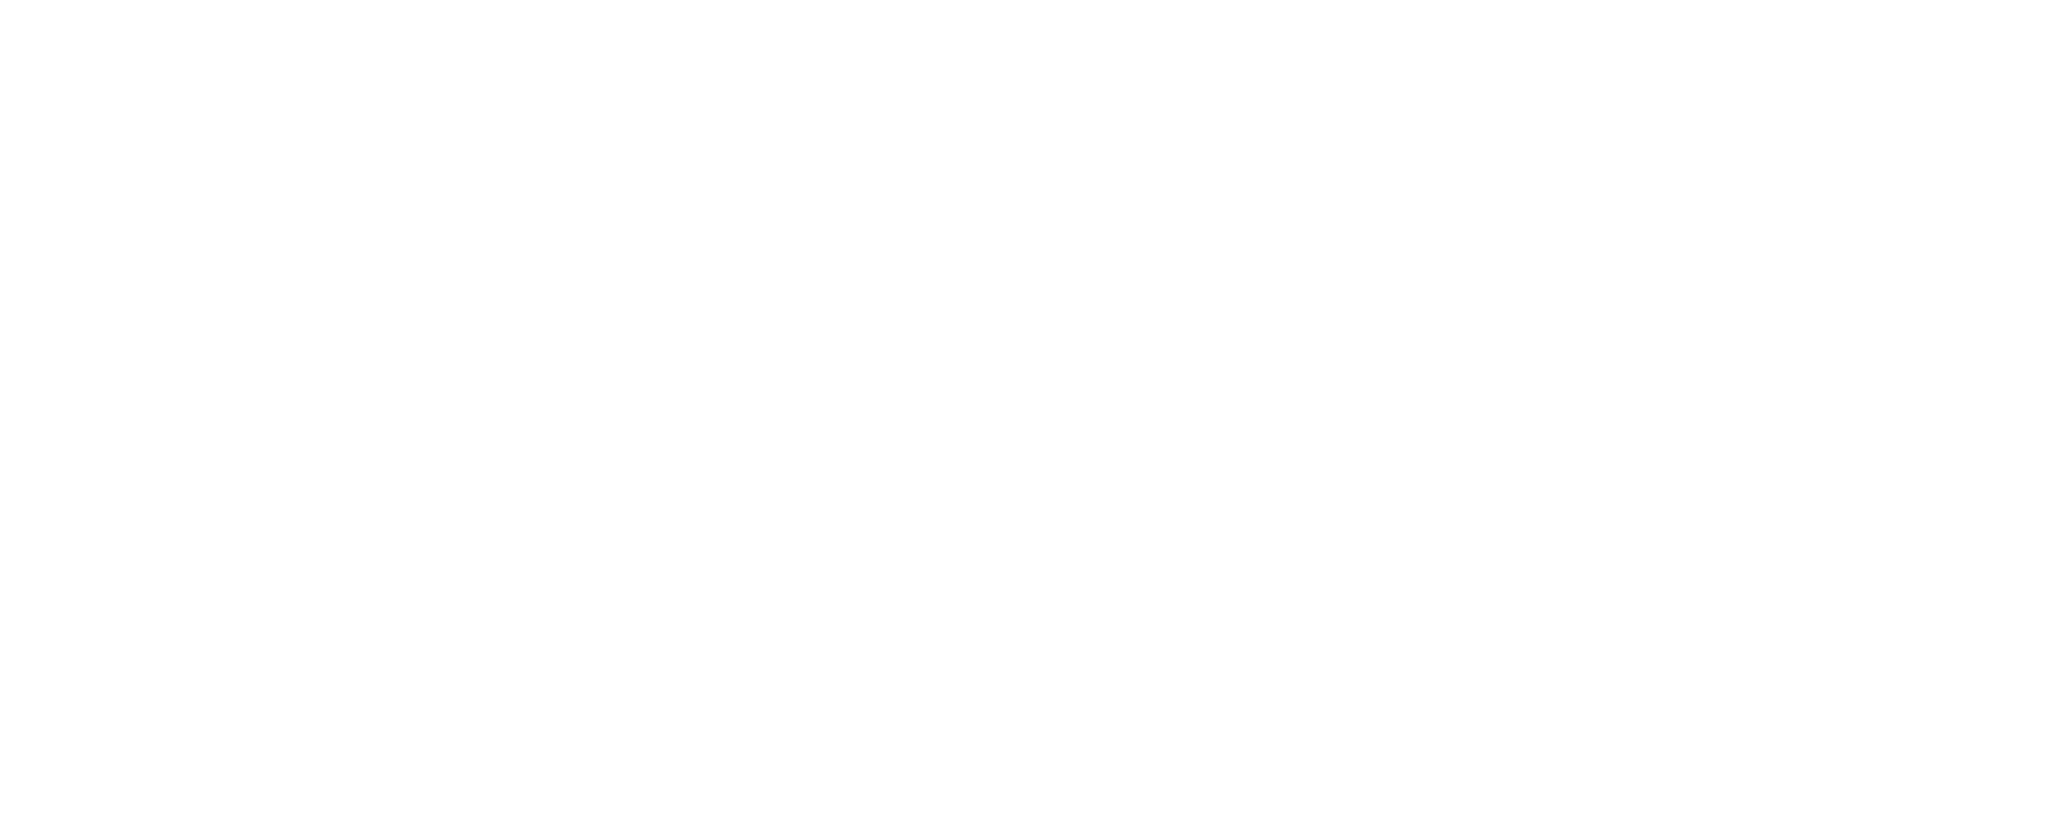 Nations Lending Logo - Mortgage Pros – we are RGV